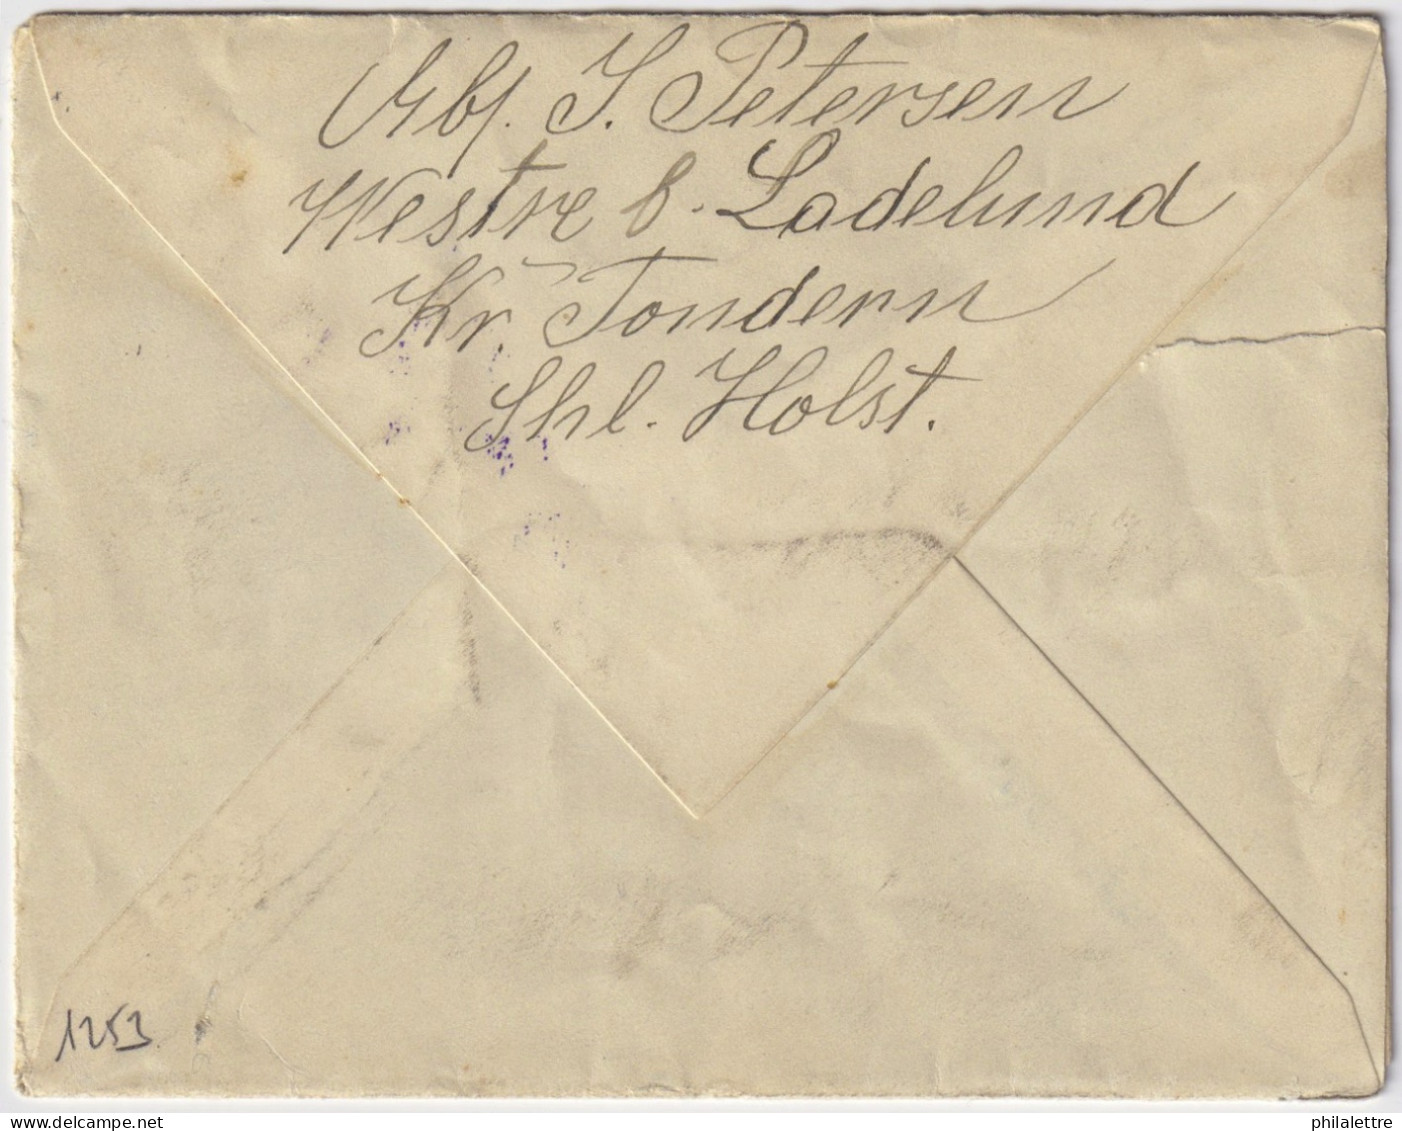 ALLEMAGNE / GERMANY - 1917 Feldpost Letter From LECK To A Soldier - Returned To Sender "ZURÜCK, GEFALLEN" (deceased) - Lettres & Documents